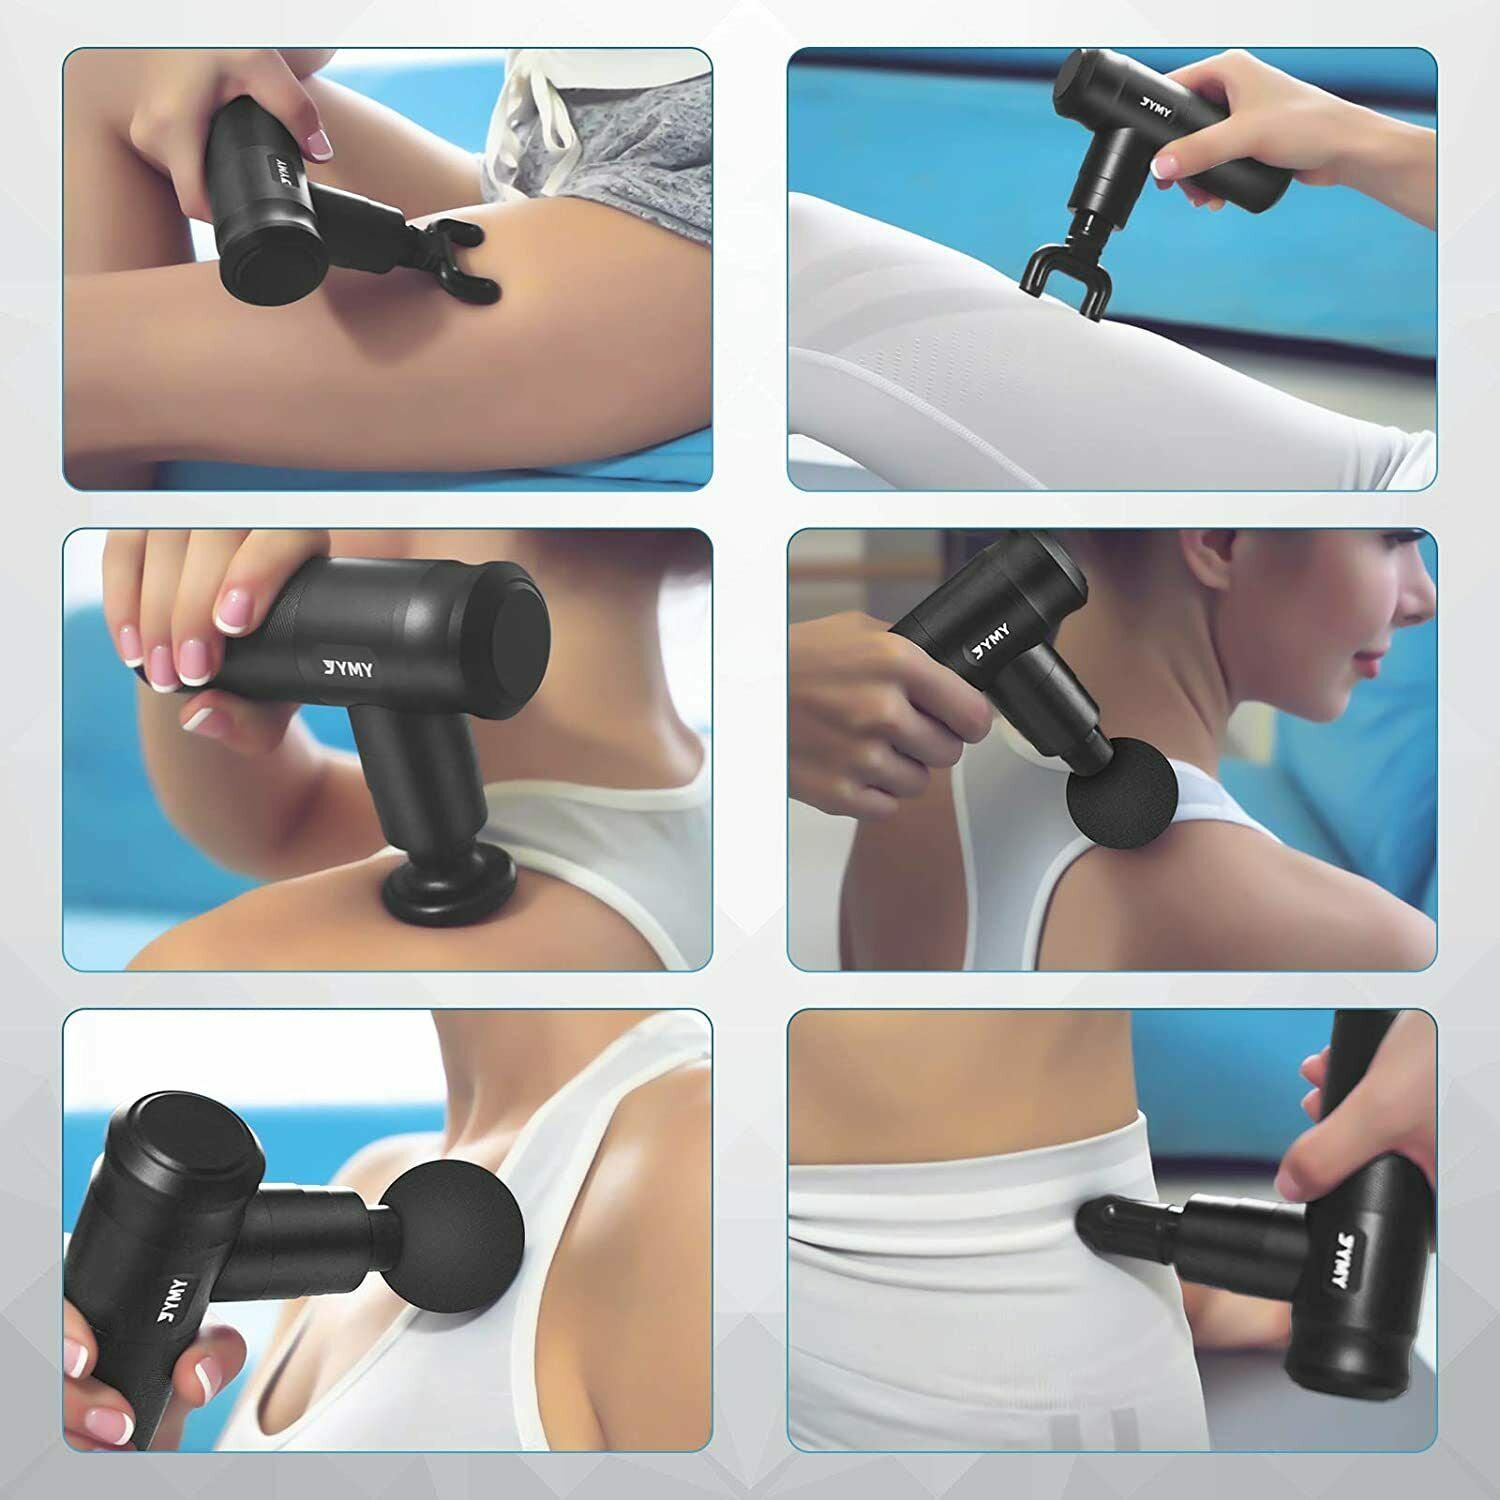 JYMY Massage Gun Mini, Palm-Sized, Super Quiet, Deep Tissue Muscle Massager Impact